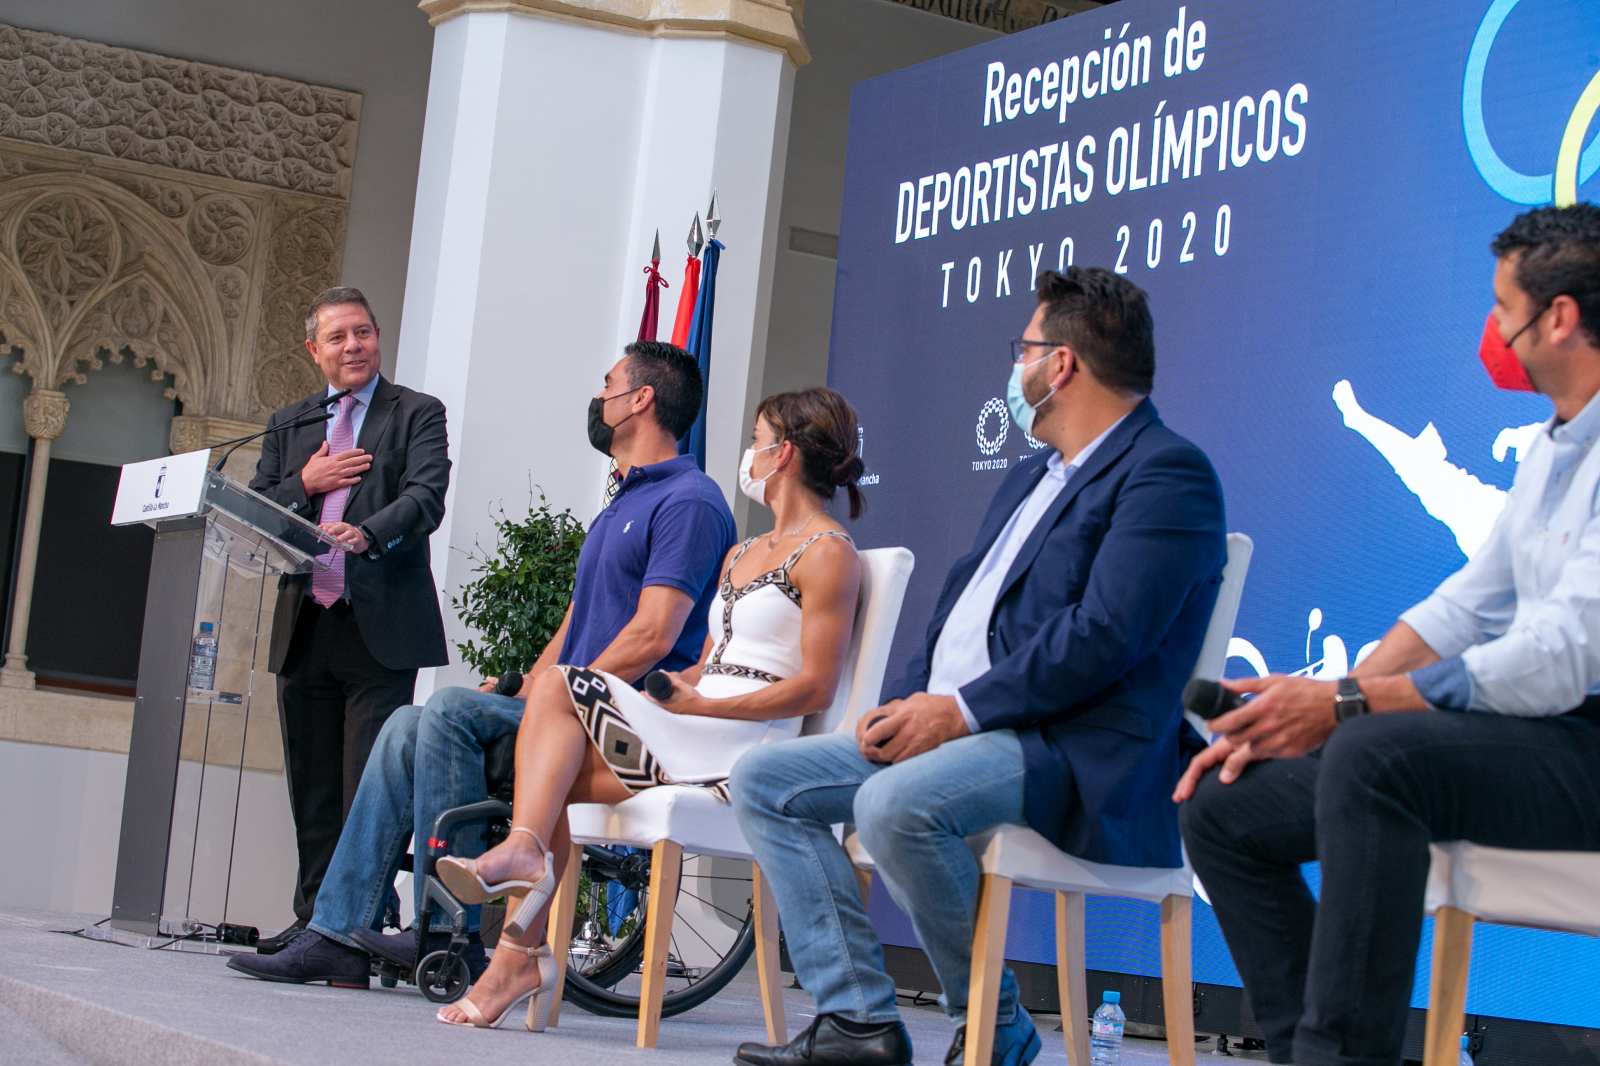 Page anuncia un Comité Olímpico Regional de Deporte Escolar